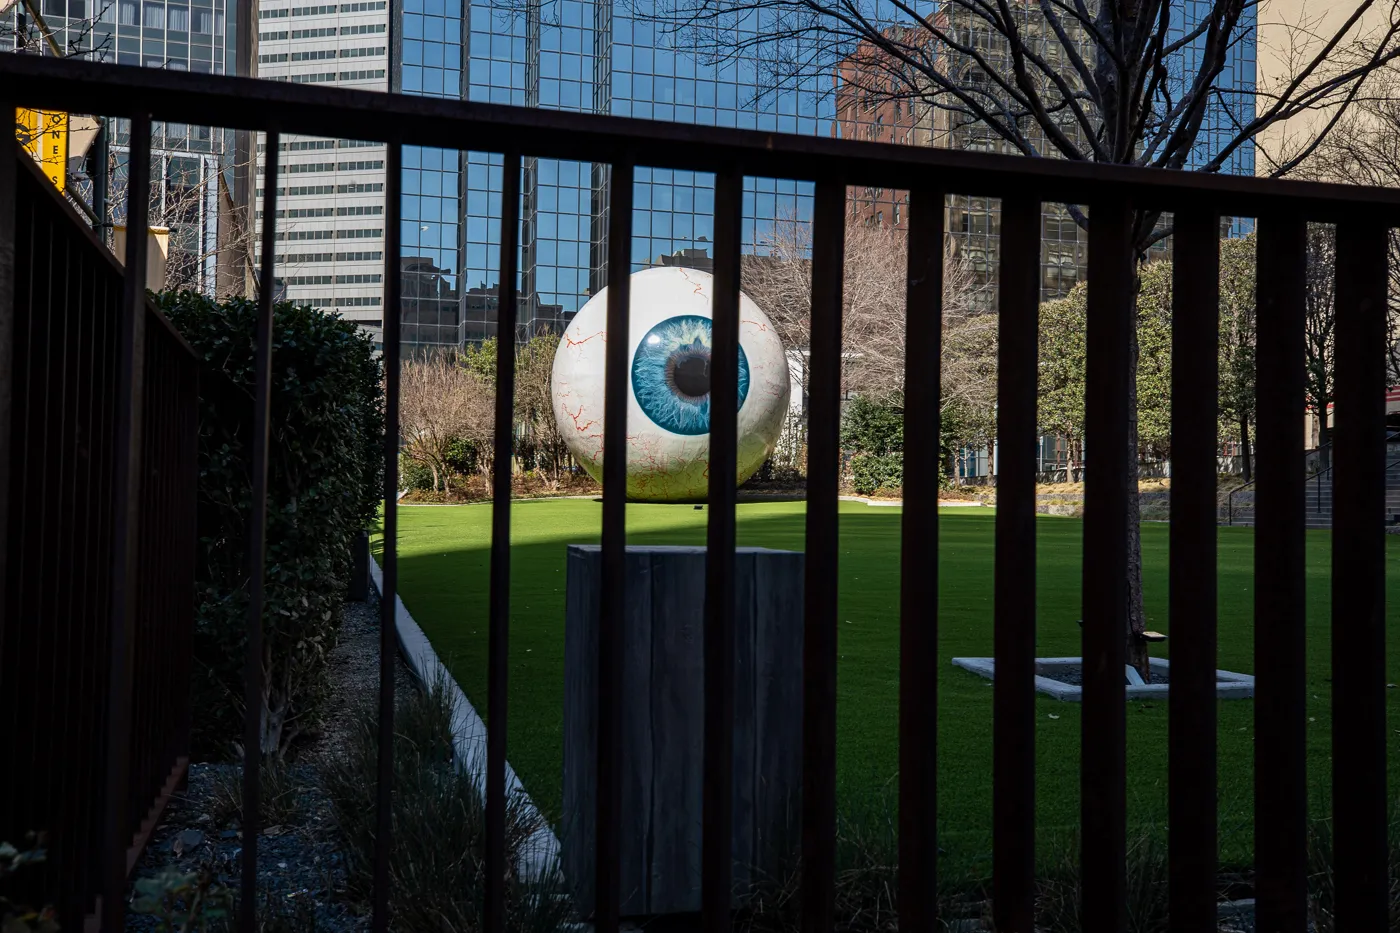 Giant Eyeball in Dallas, Texas roadside attraction